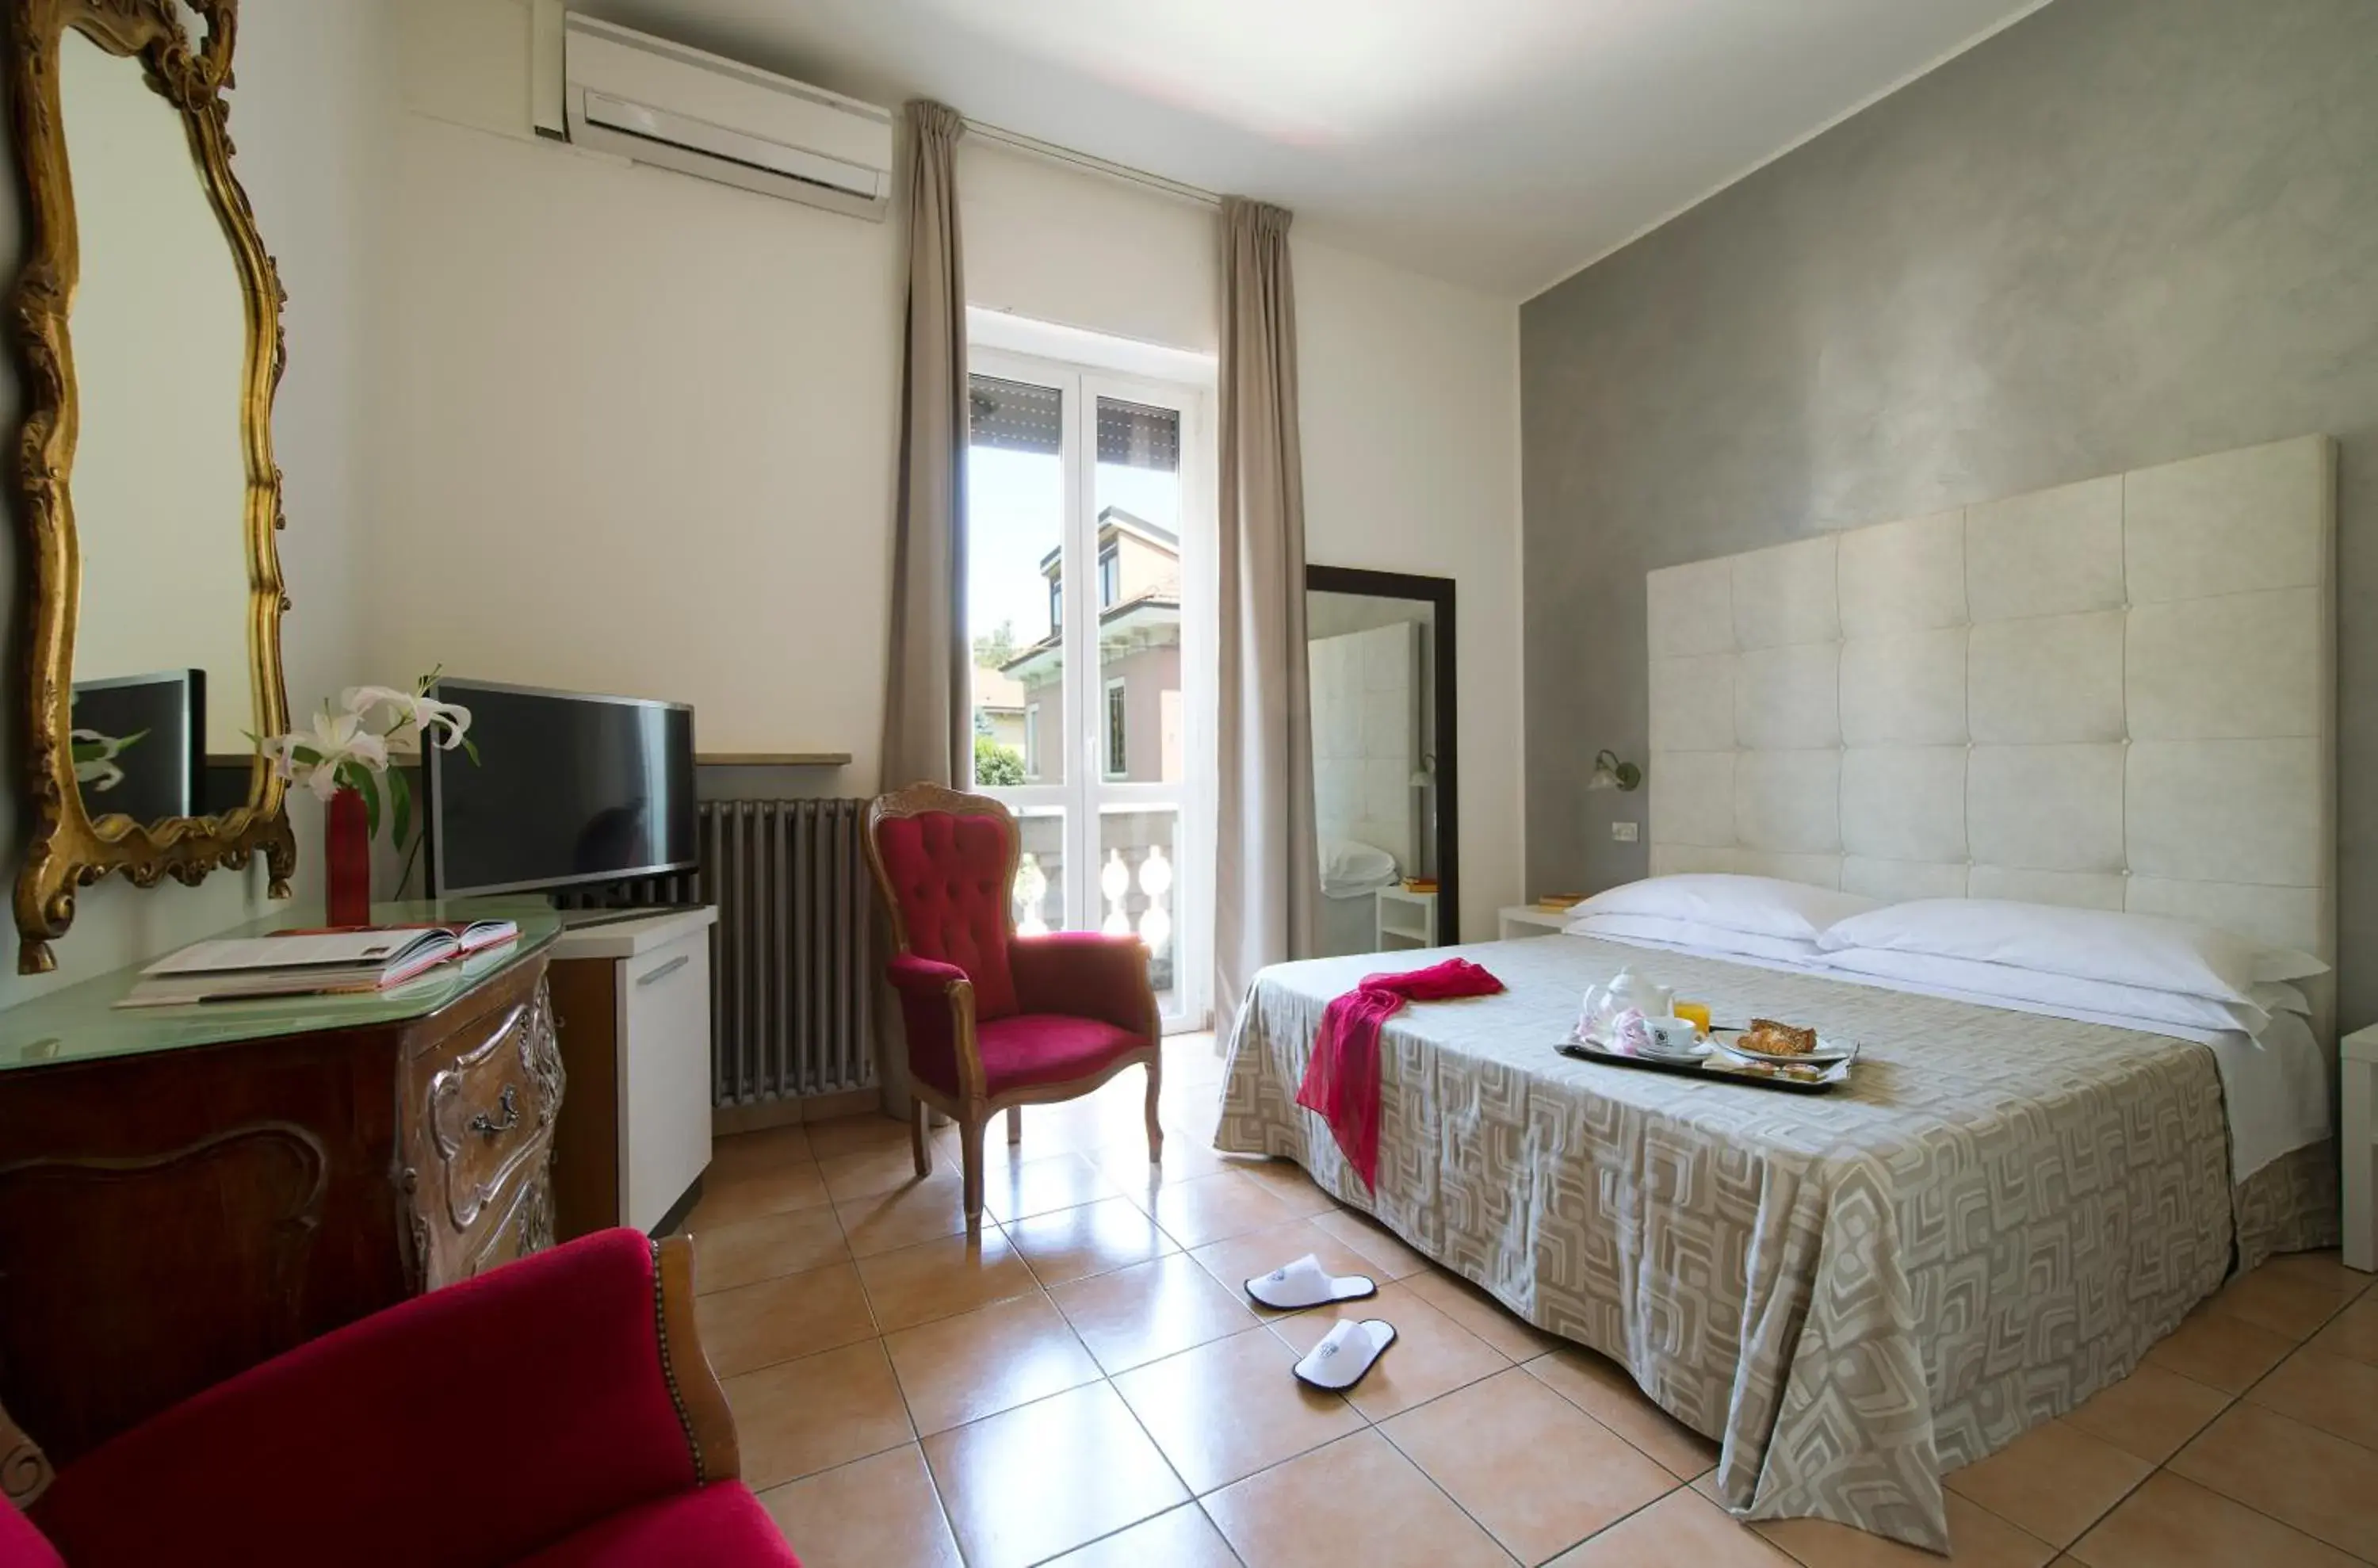 Bedroom, Room Photo in Hotel Delizia